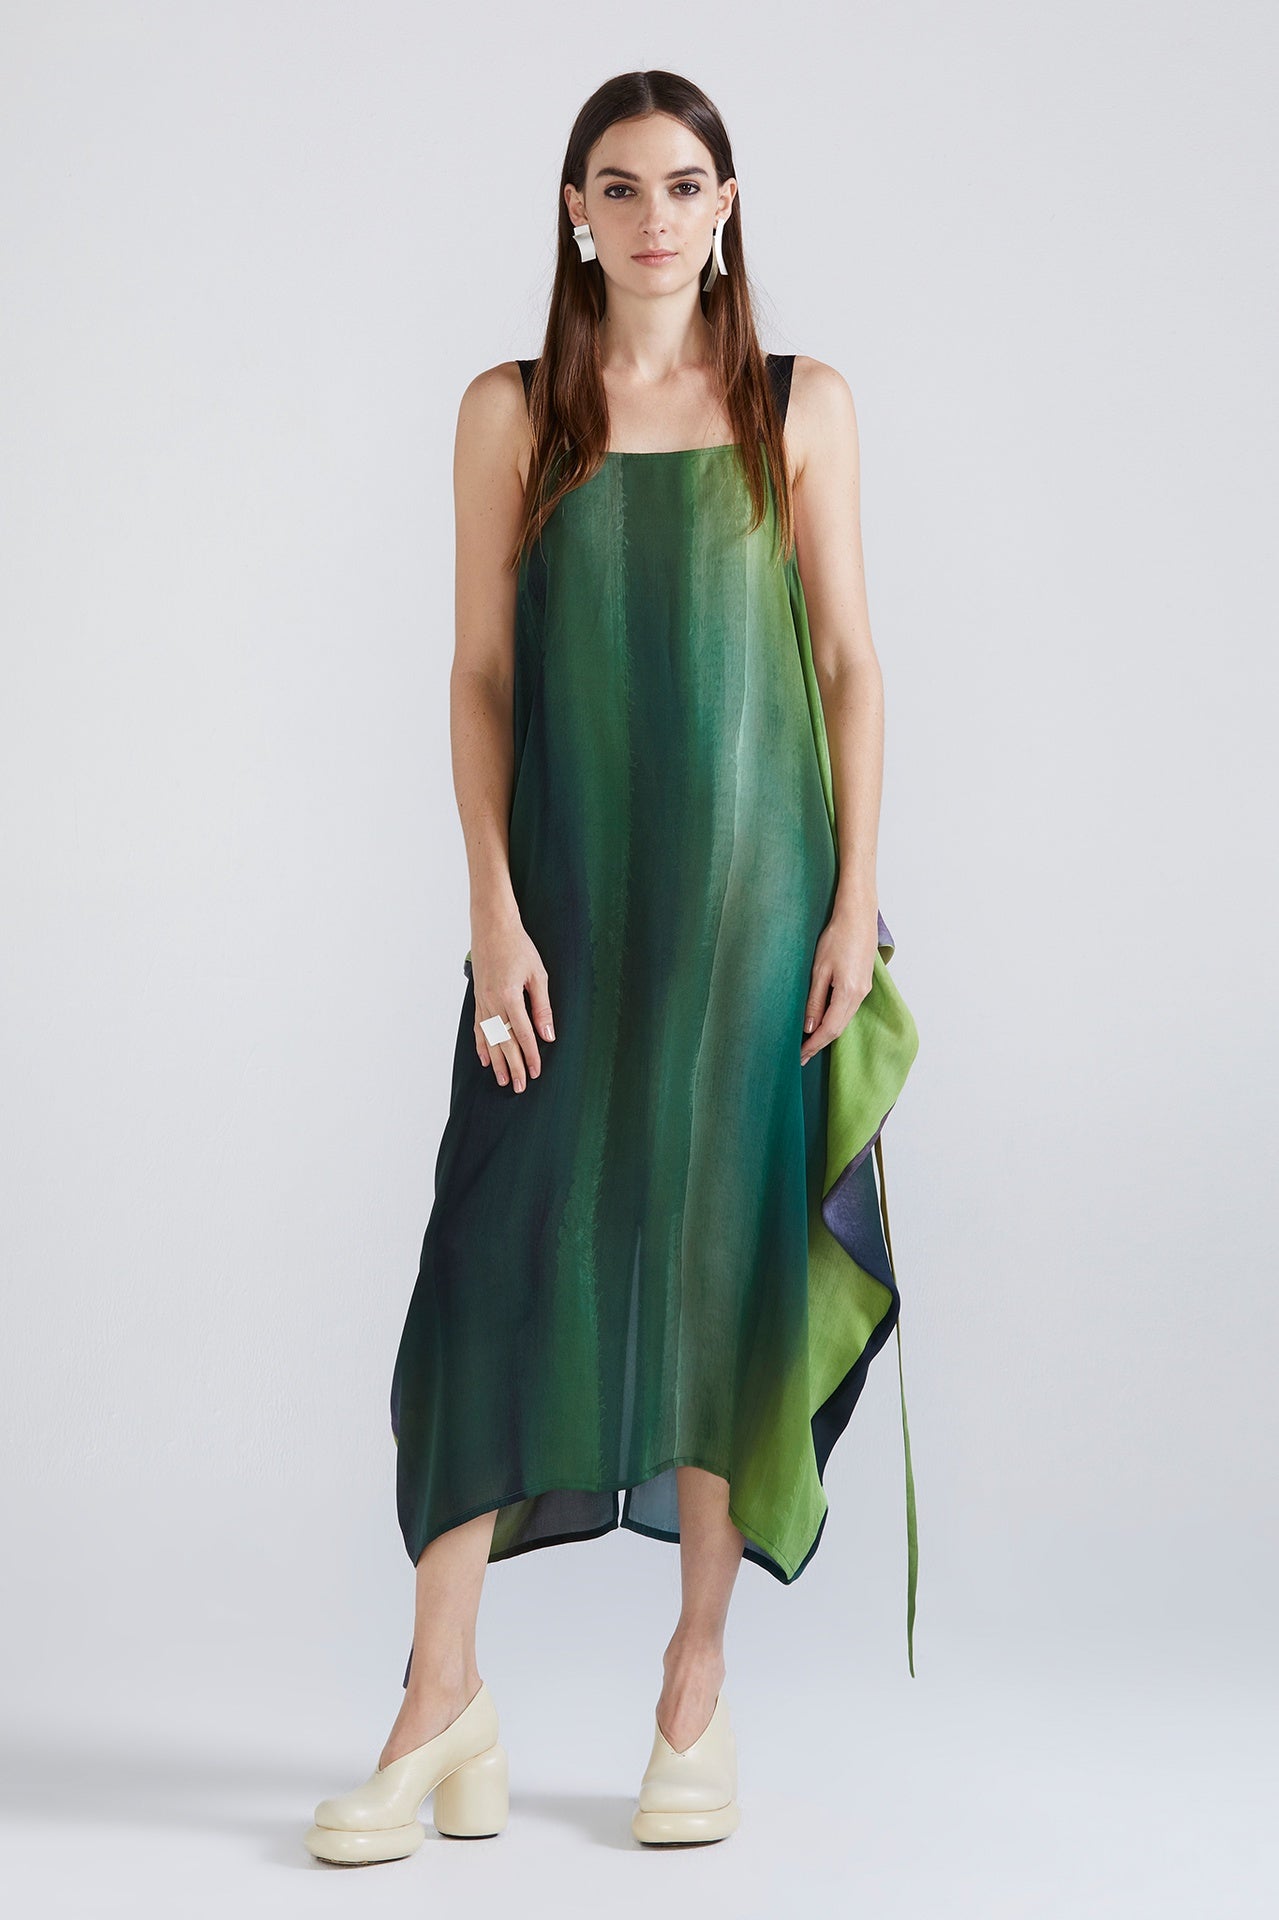 Print Ritual Dress - Motion Print in Green - Taylor